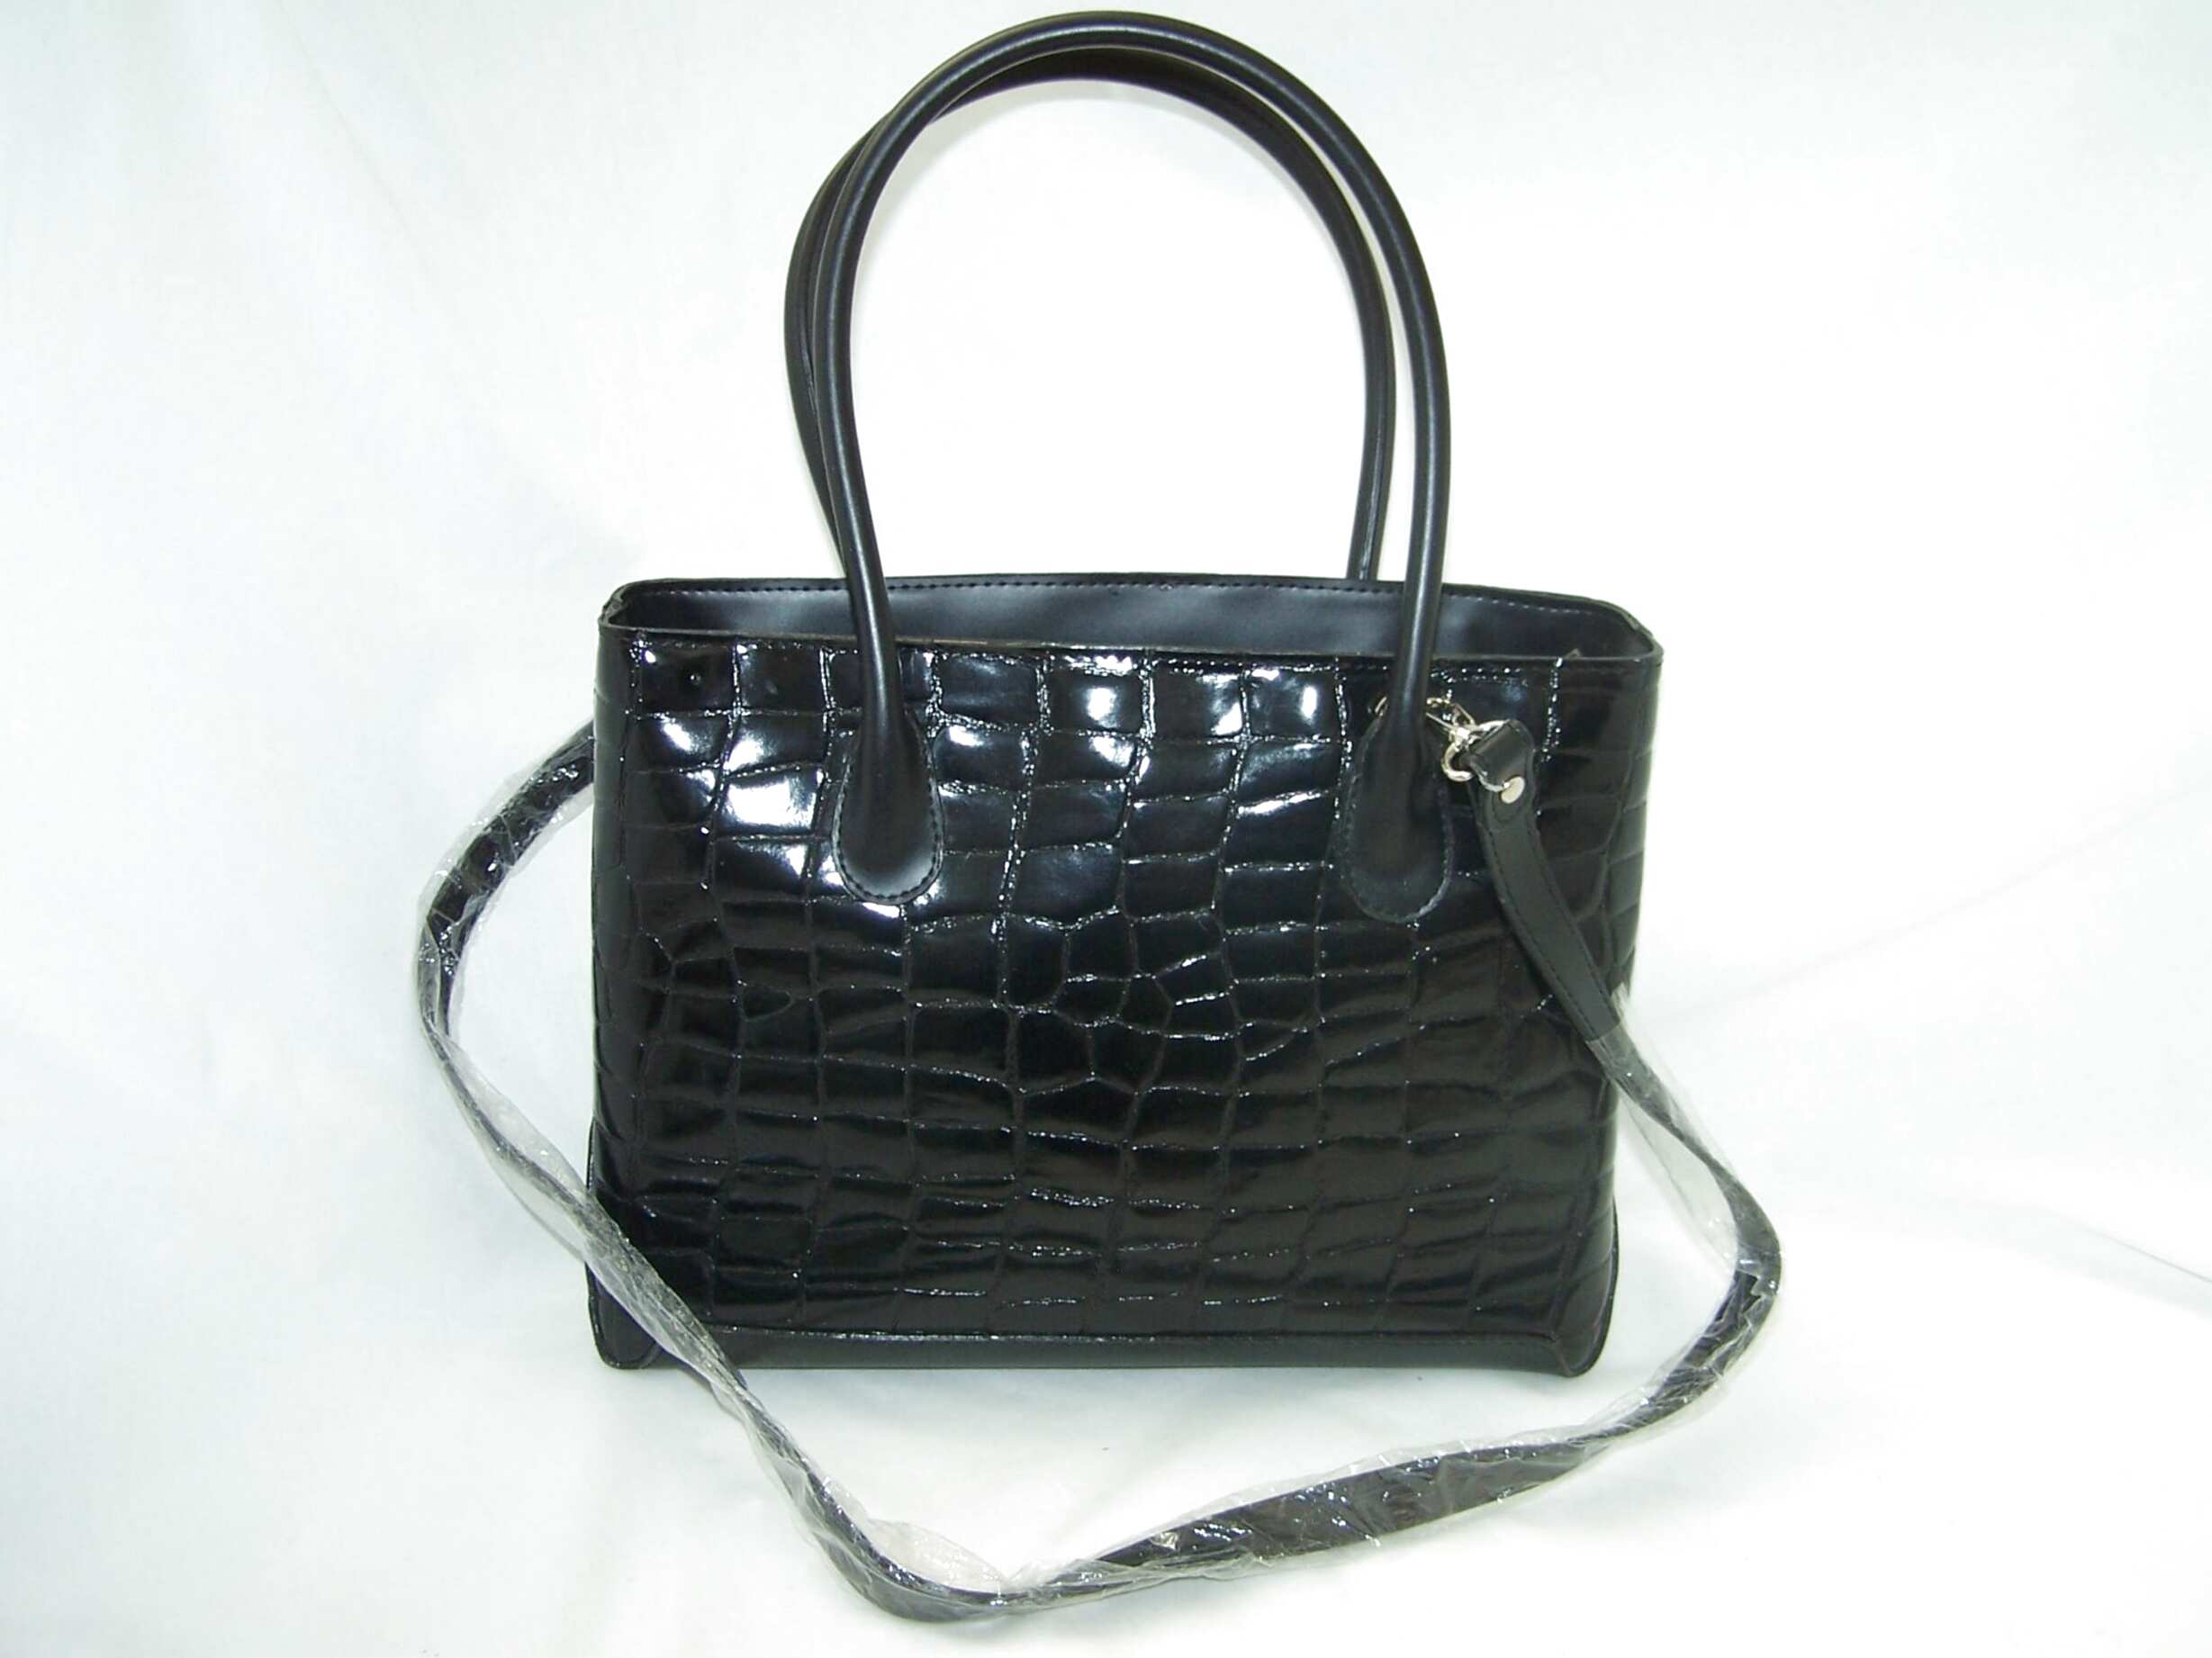 Joanna Hall Bag for sale in UK | 47 used Joanna Hall Bags